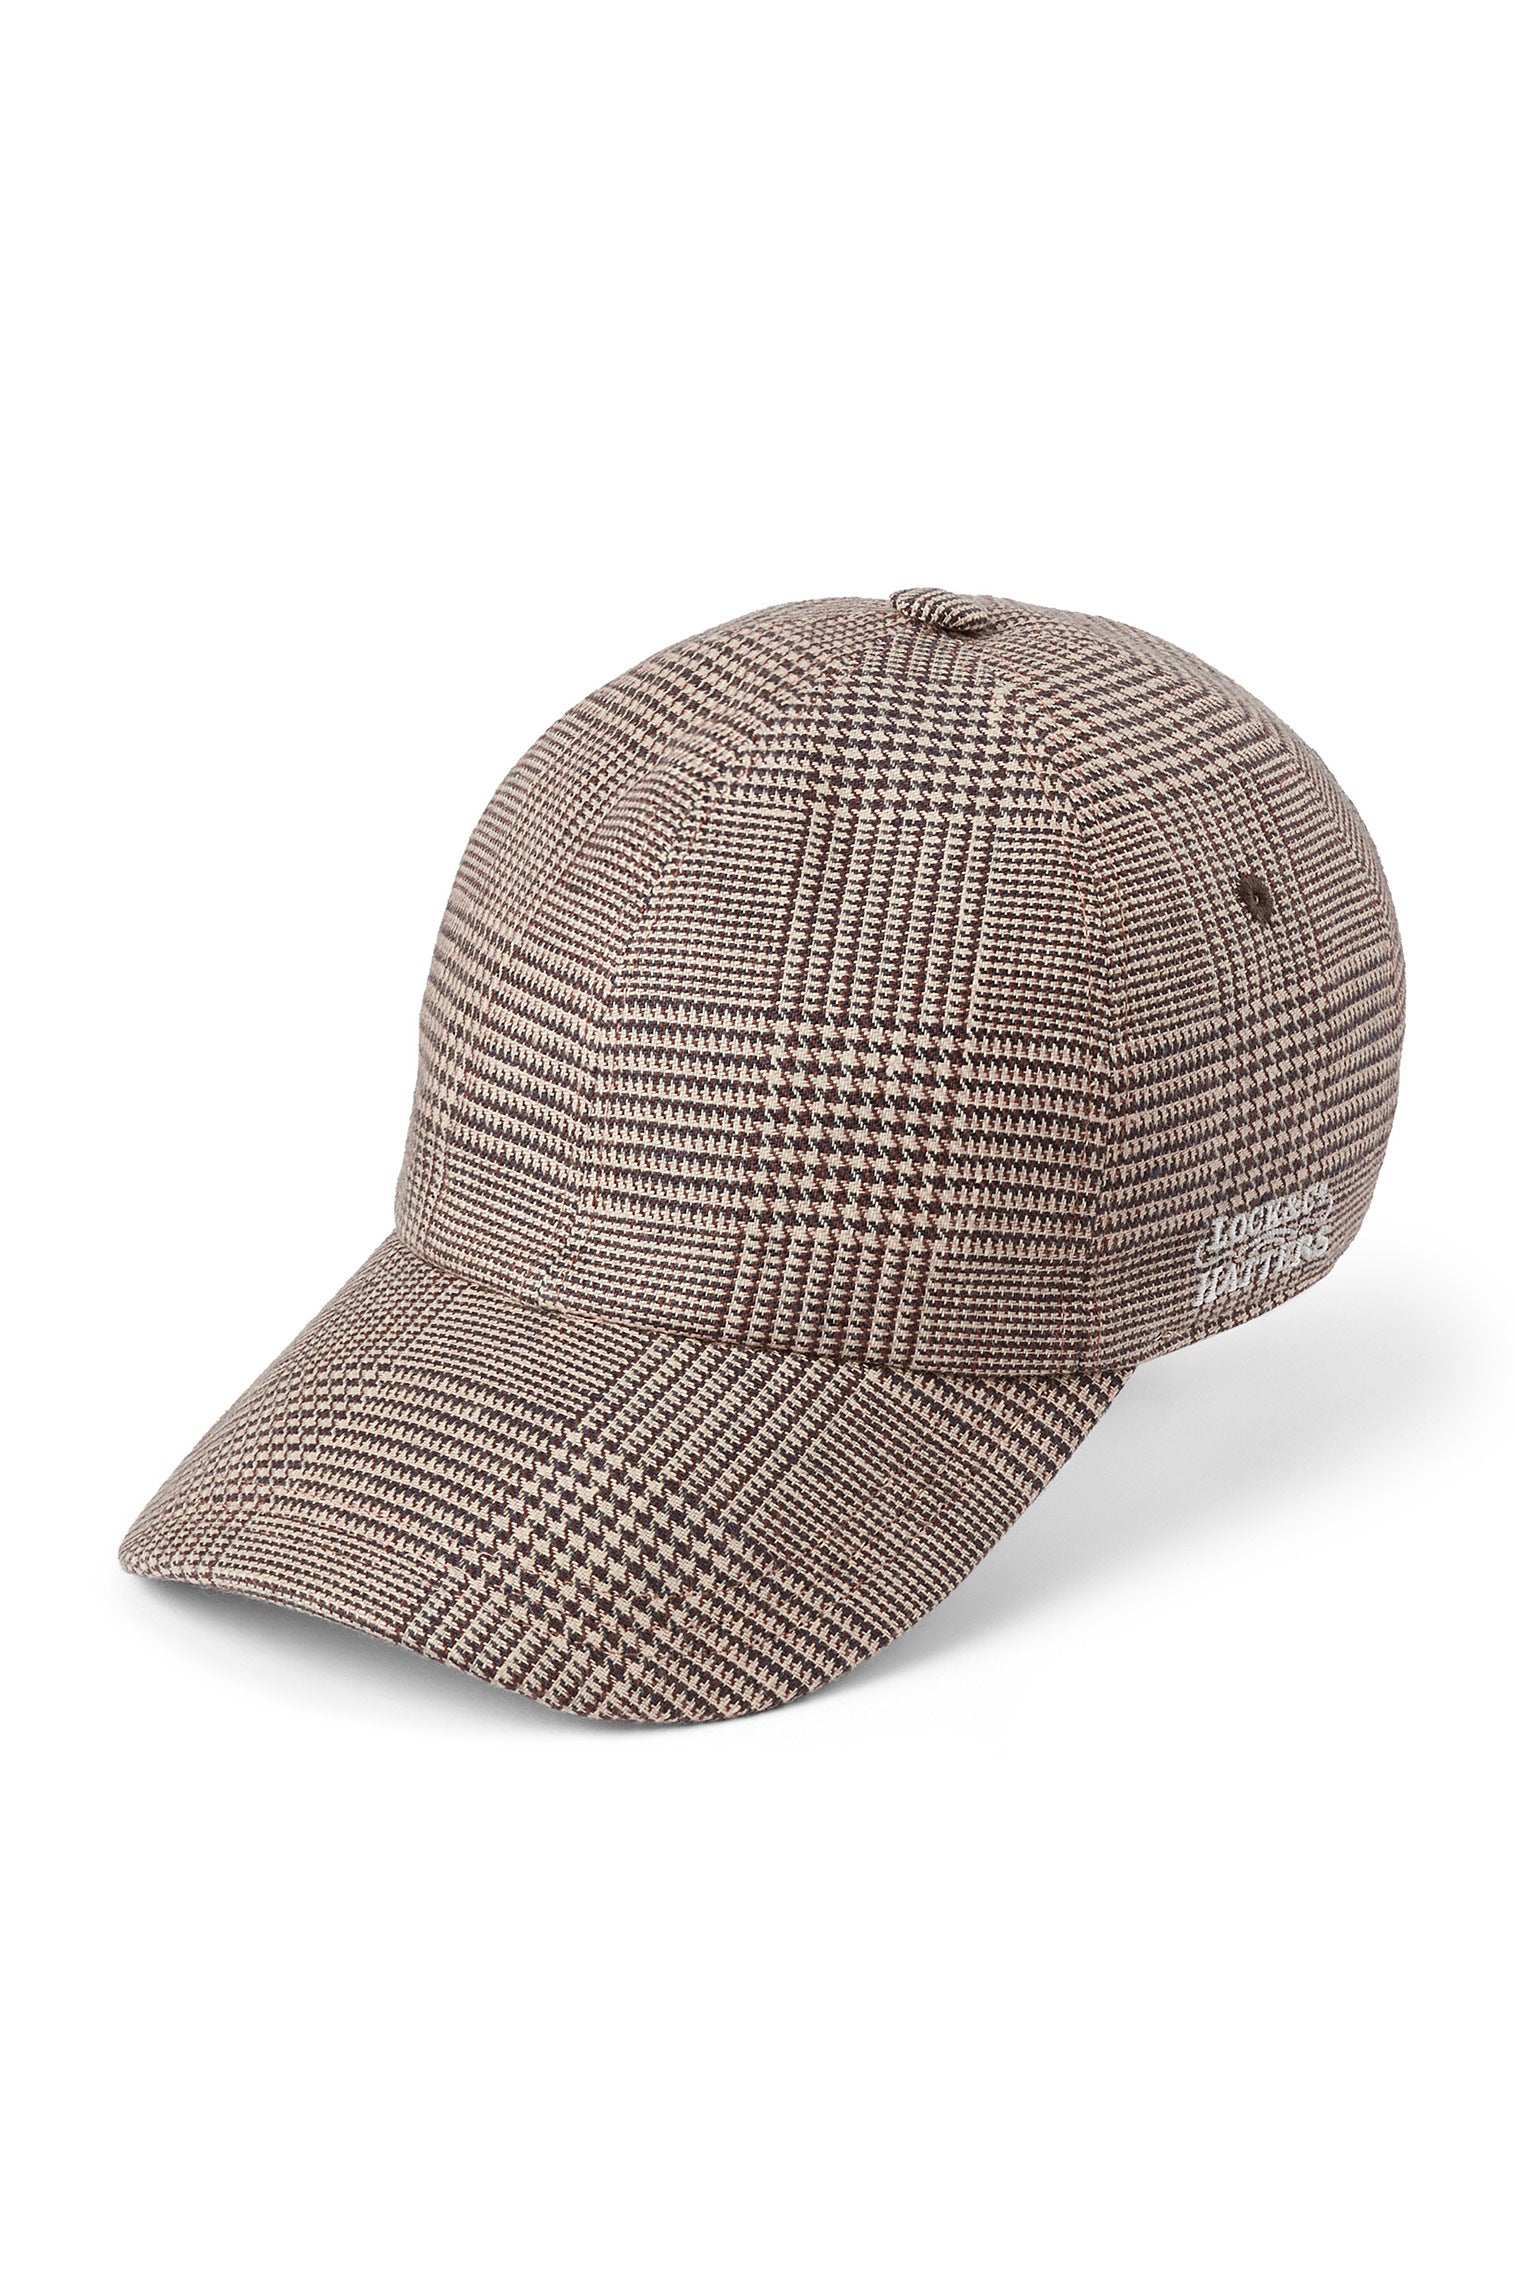 Adjustable Check Baseball Cap - Best Selling Hats - Lock & Co. Hatters London UK